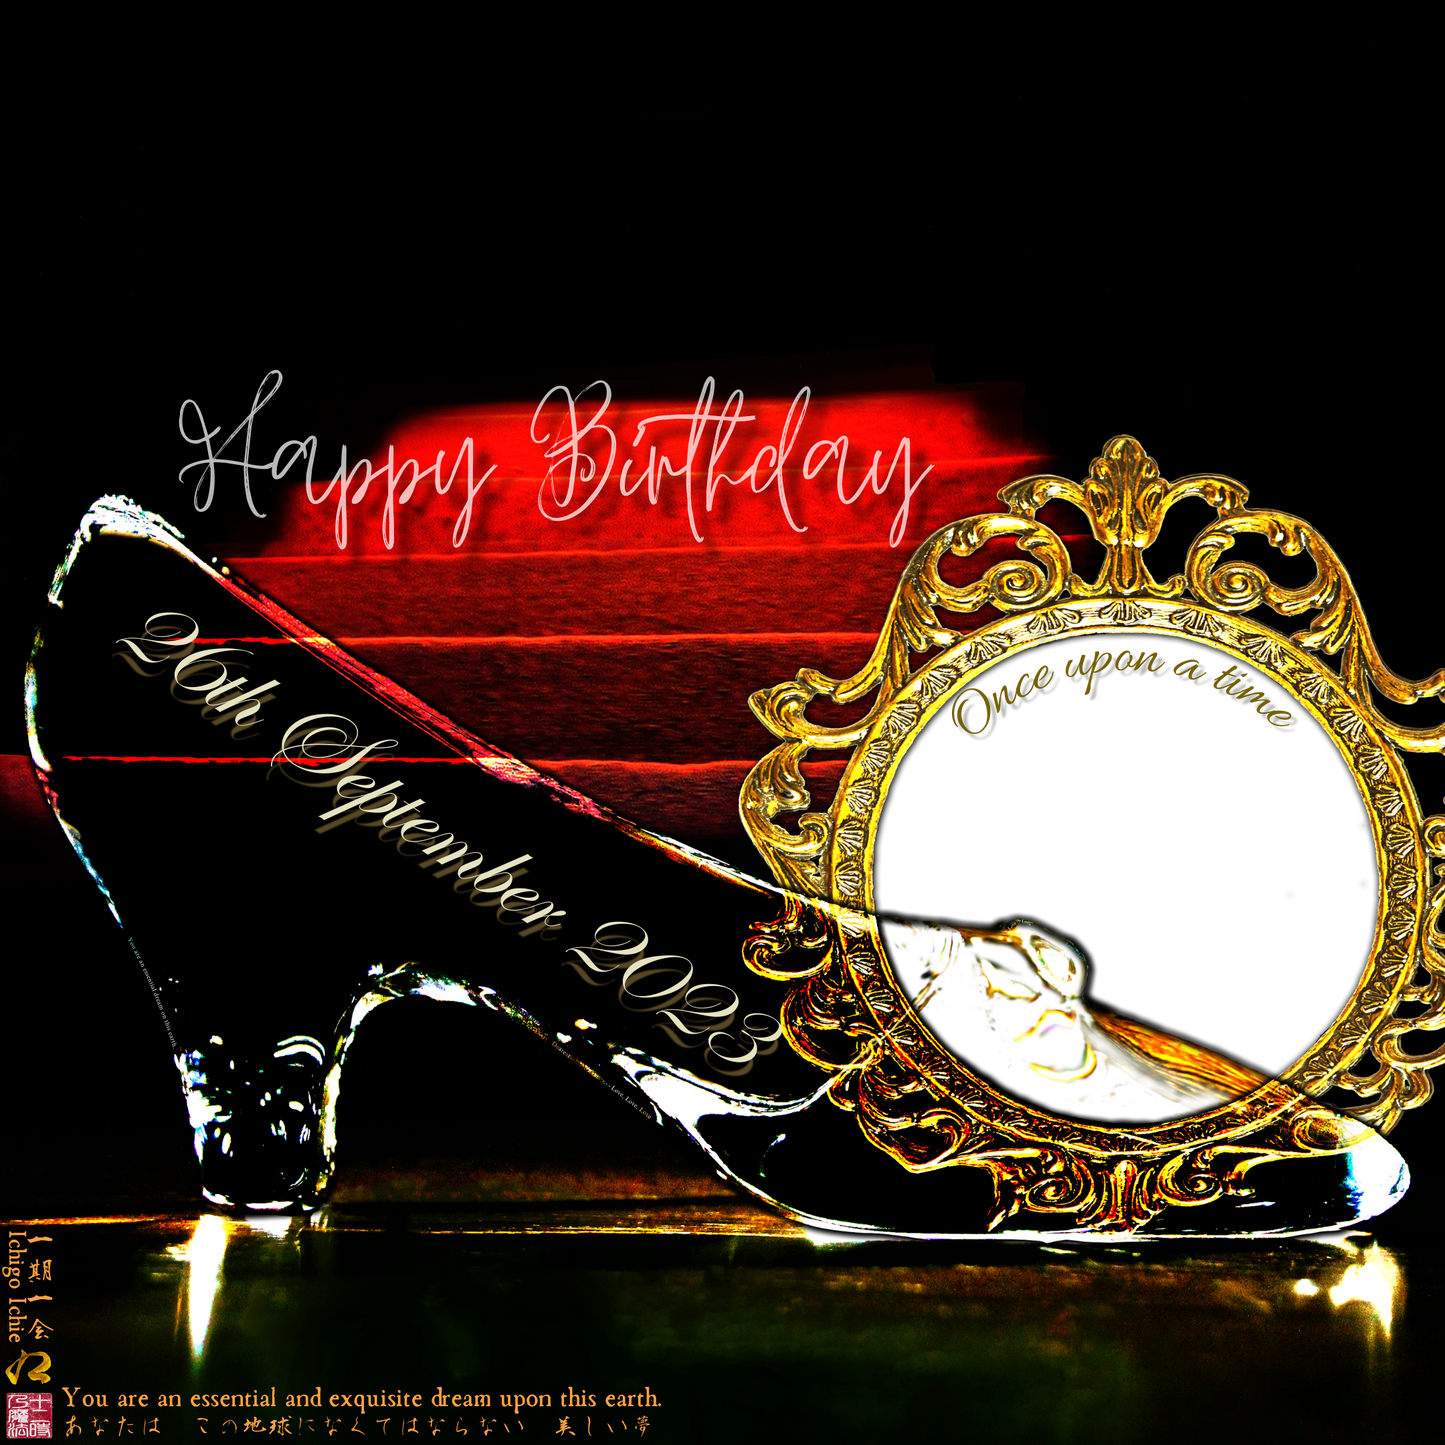 Happy Birthday Glass Slipper "Ichigo Ichie" 26th September 2023 the Right (1-of-1) NFT Art